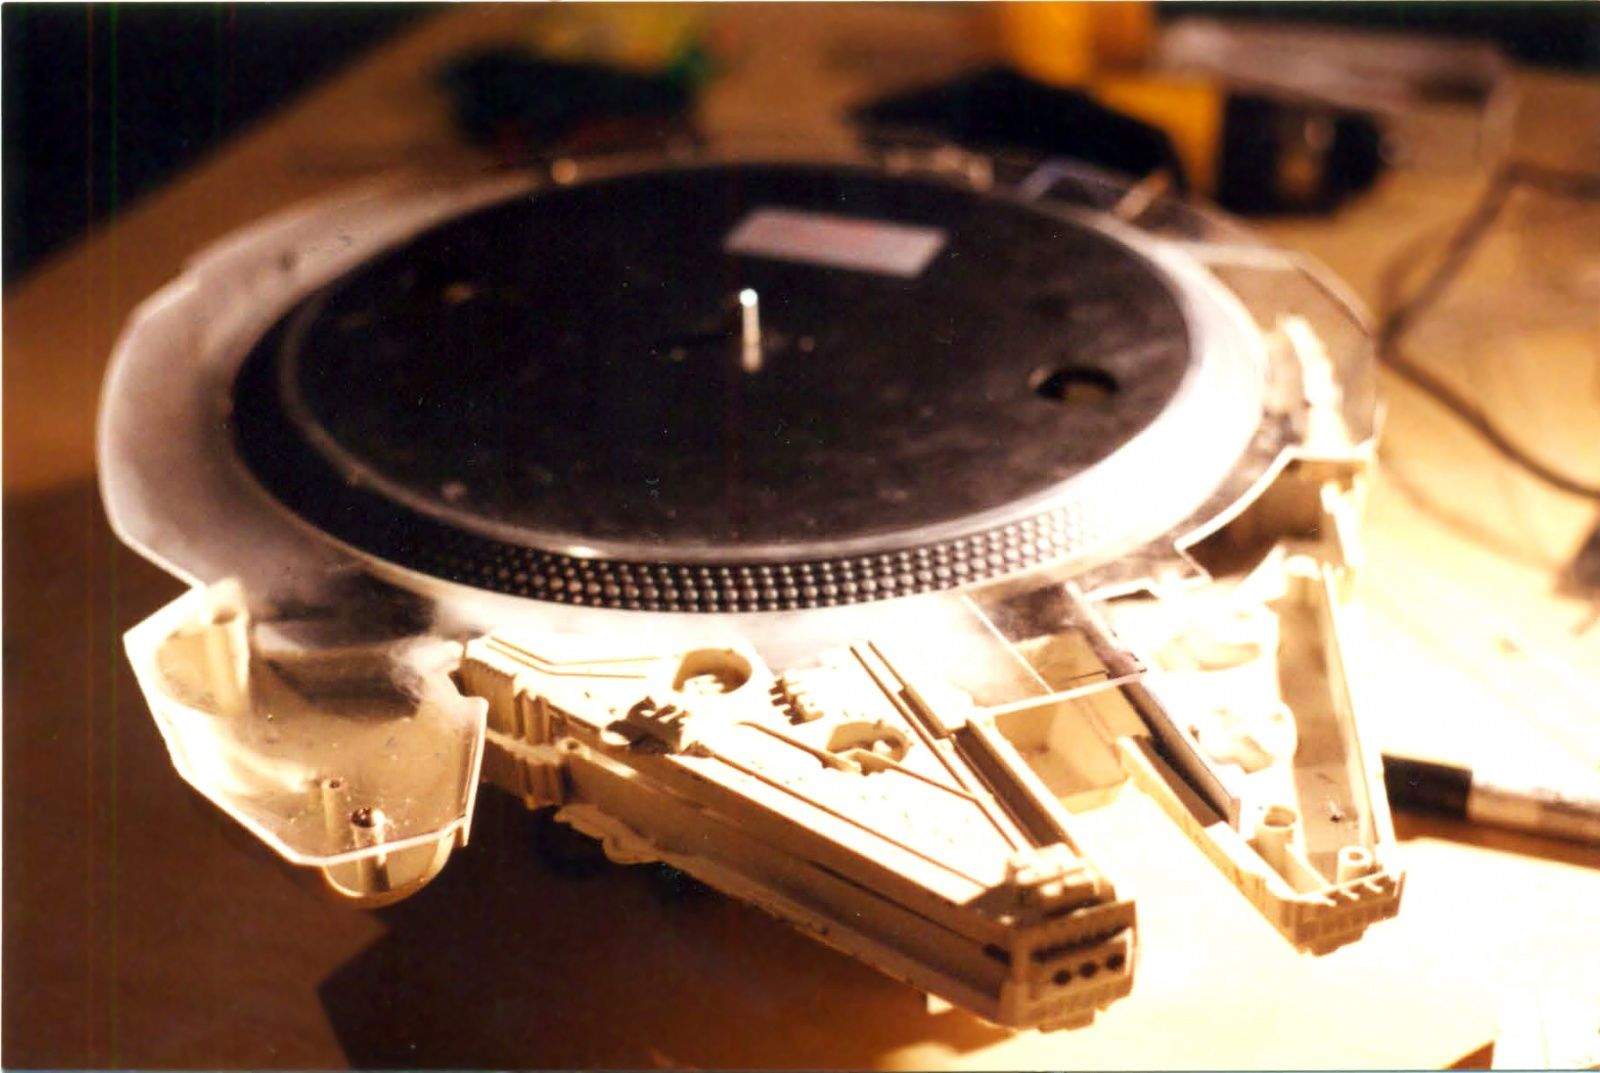 The Millennium Falcon makes a great DJ turntable. Photo: Marco at Picotek